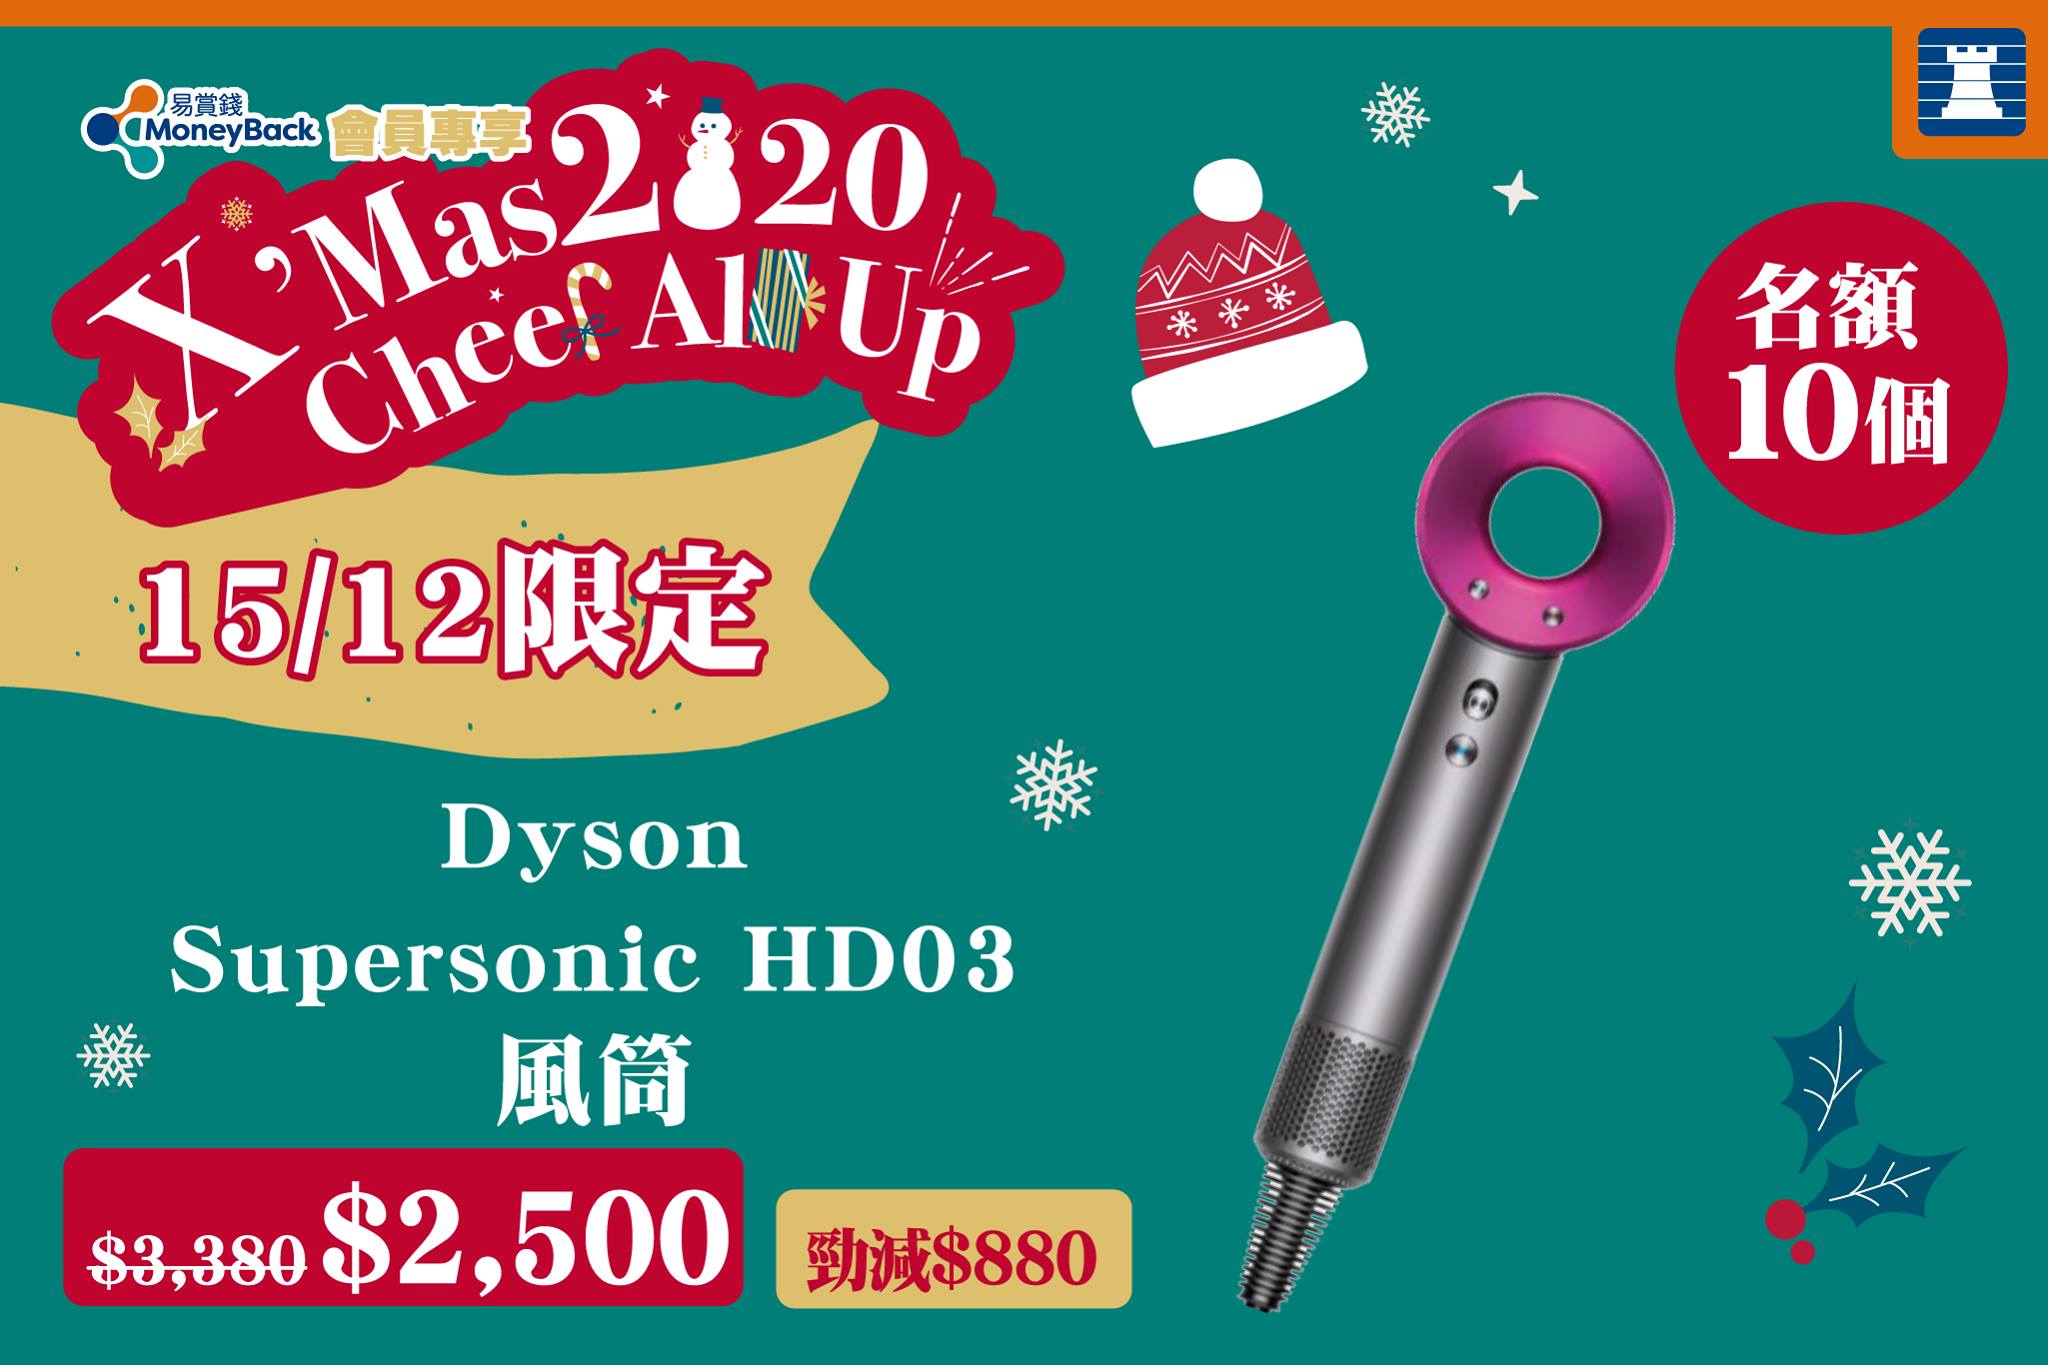 【15/12限定🎄 Dyson Supersonic風筒勁減$880 🤩】